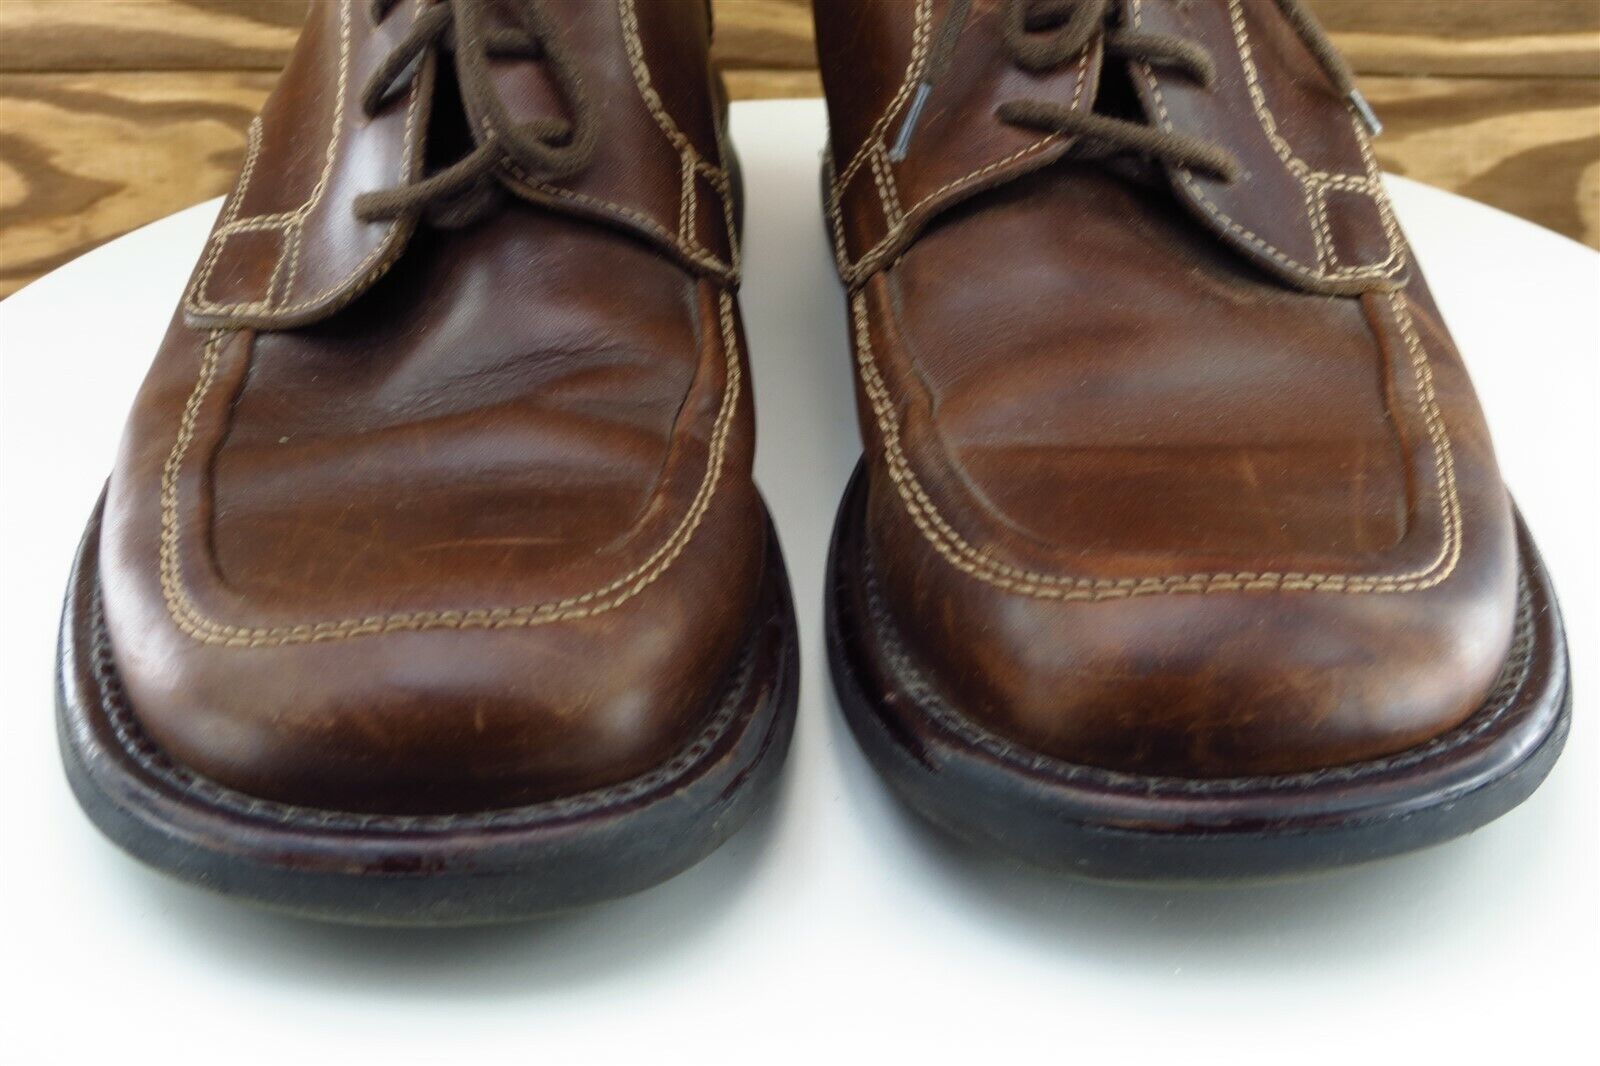 Kenneth Cole Reaction Shoes Sz 9 M Brown Derby Oxfords Leather Men - $39.59